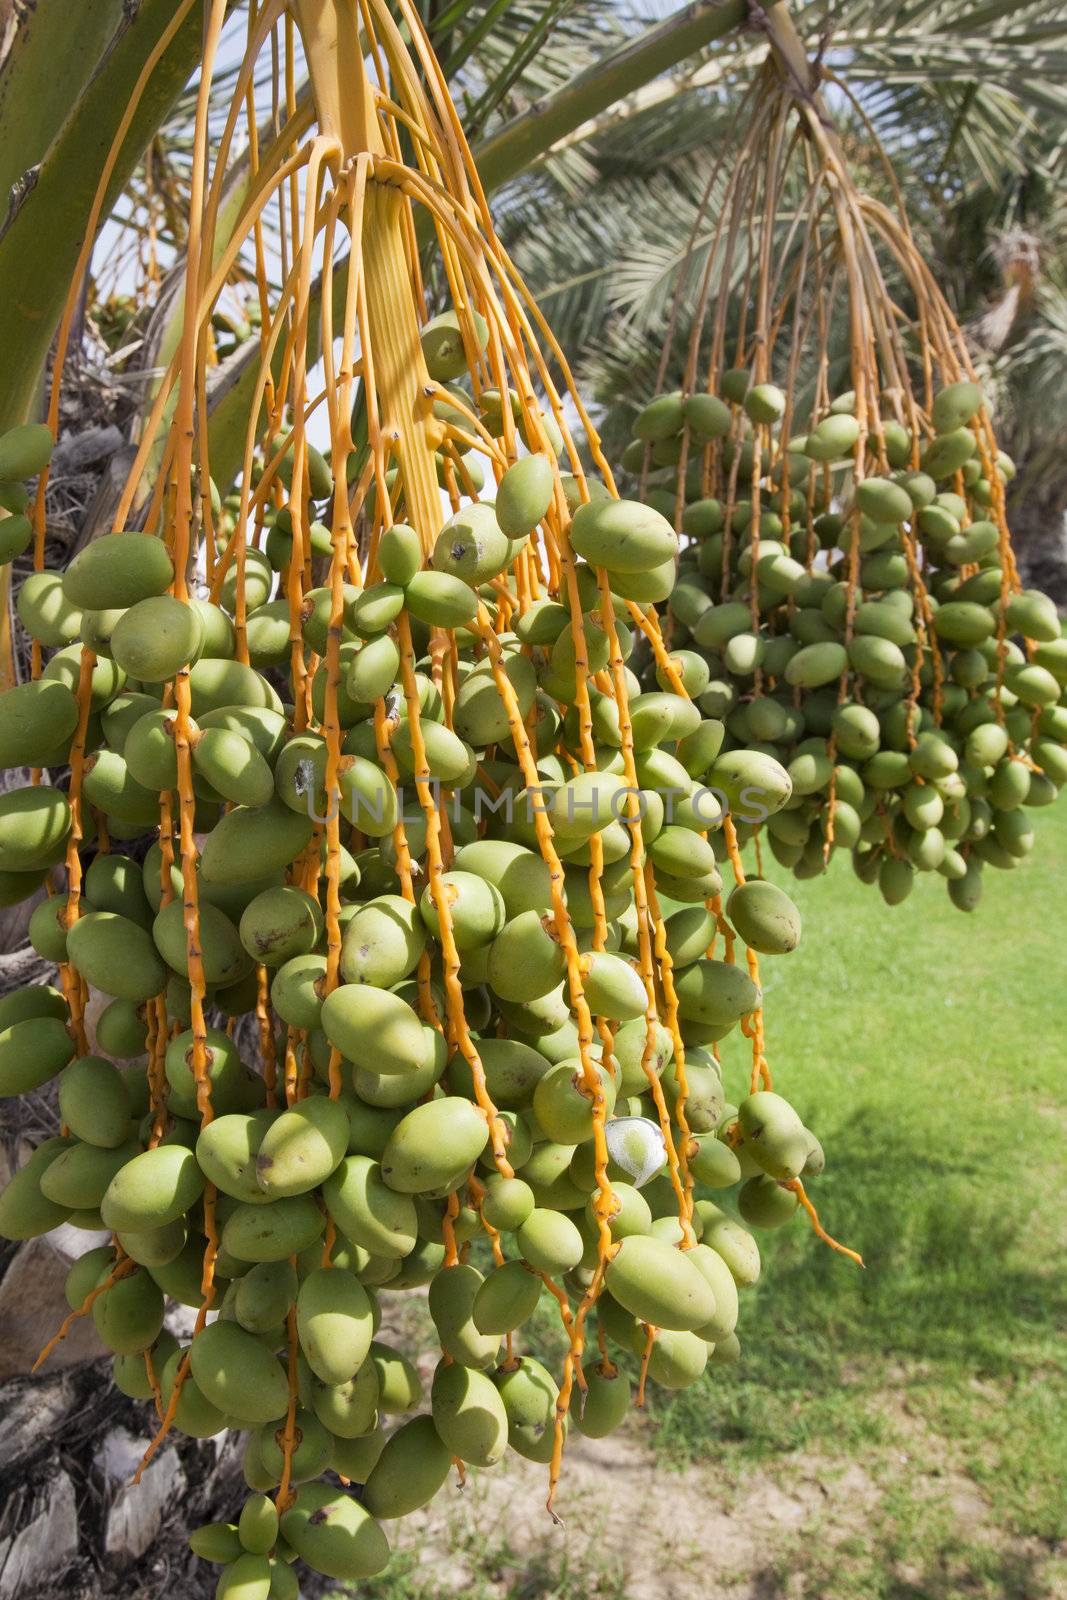 Image of green unripe Arabian dates growing on trees at Abu Dhabi, United Arab Emirates.